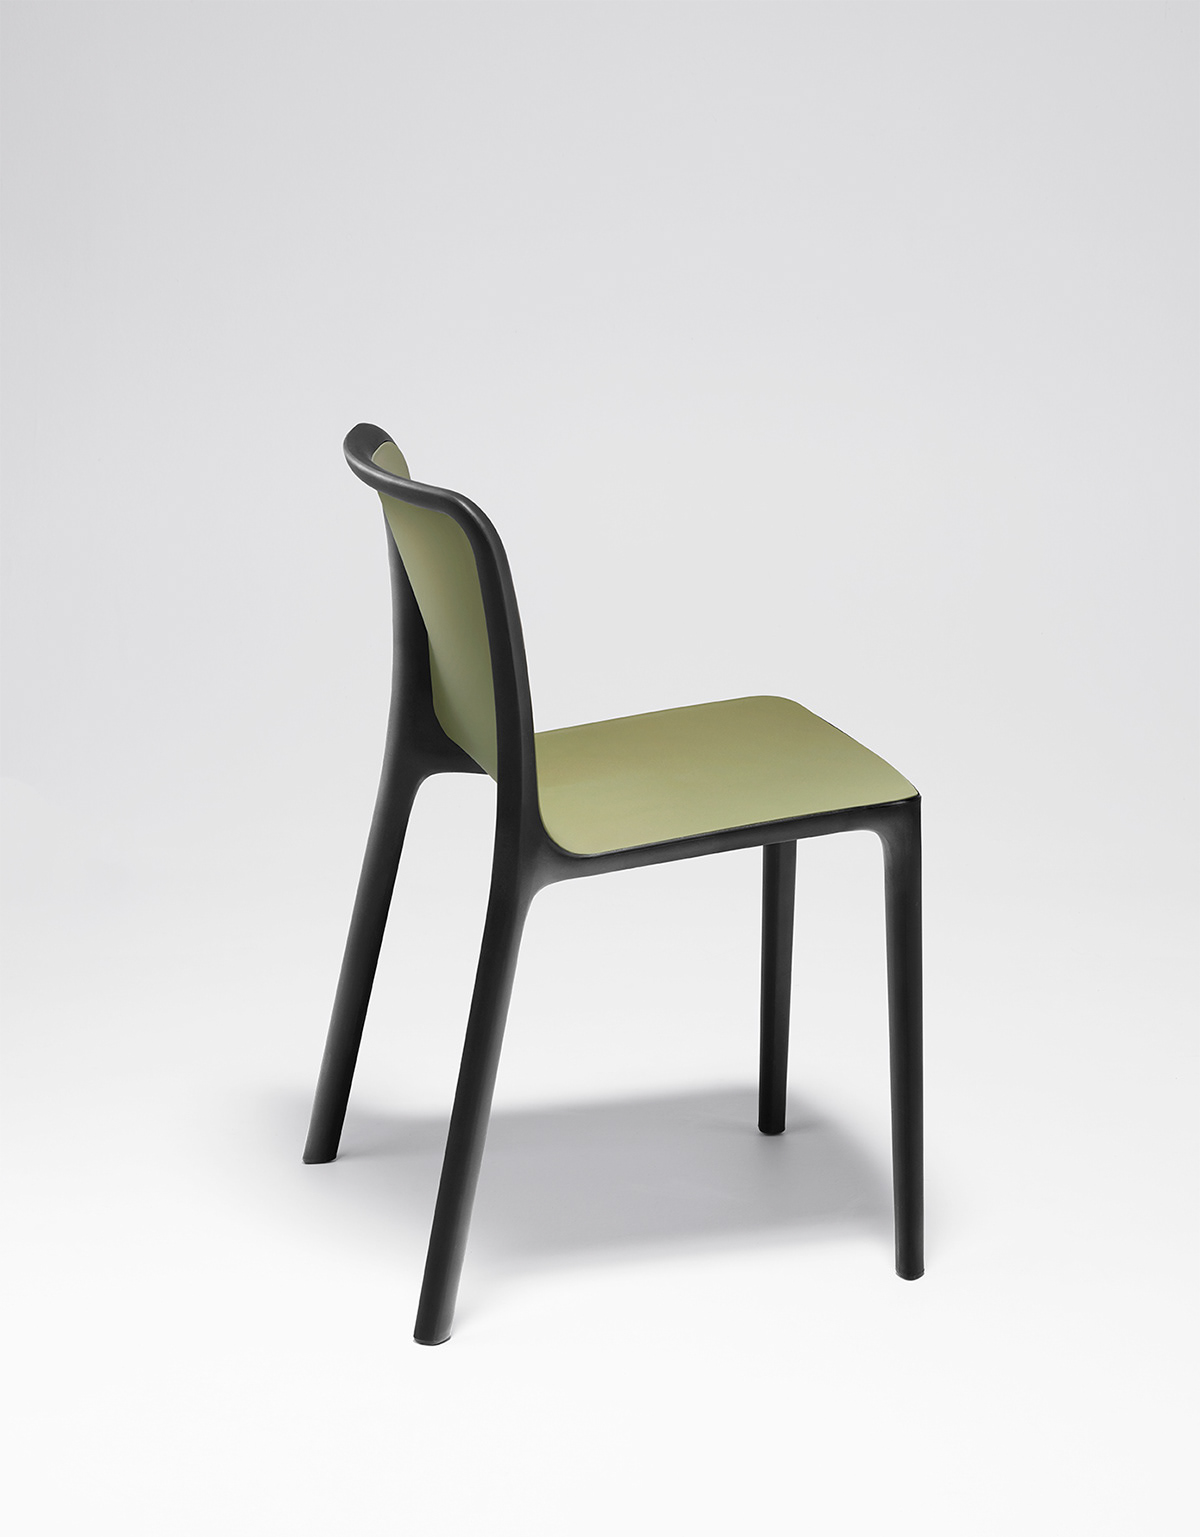 Ramos Bassols Bika chiar FORMA5 contract chair plastic chair stackable chair contemporary furniture furniture design 